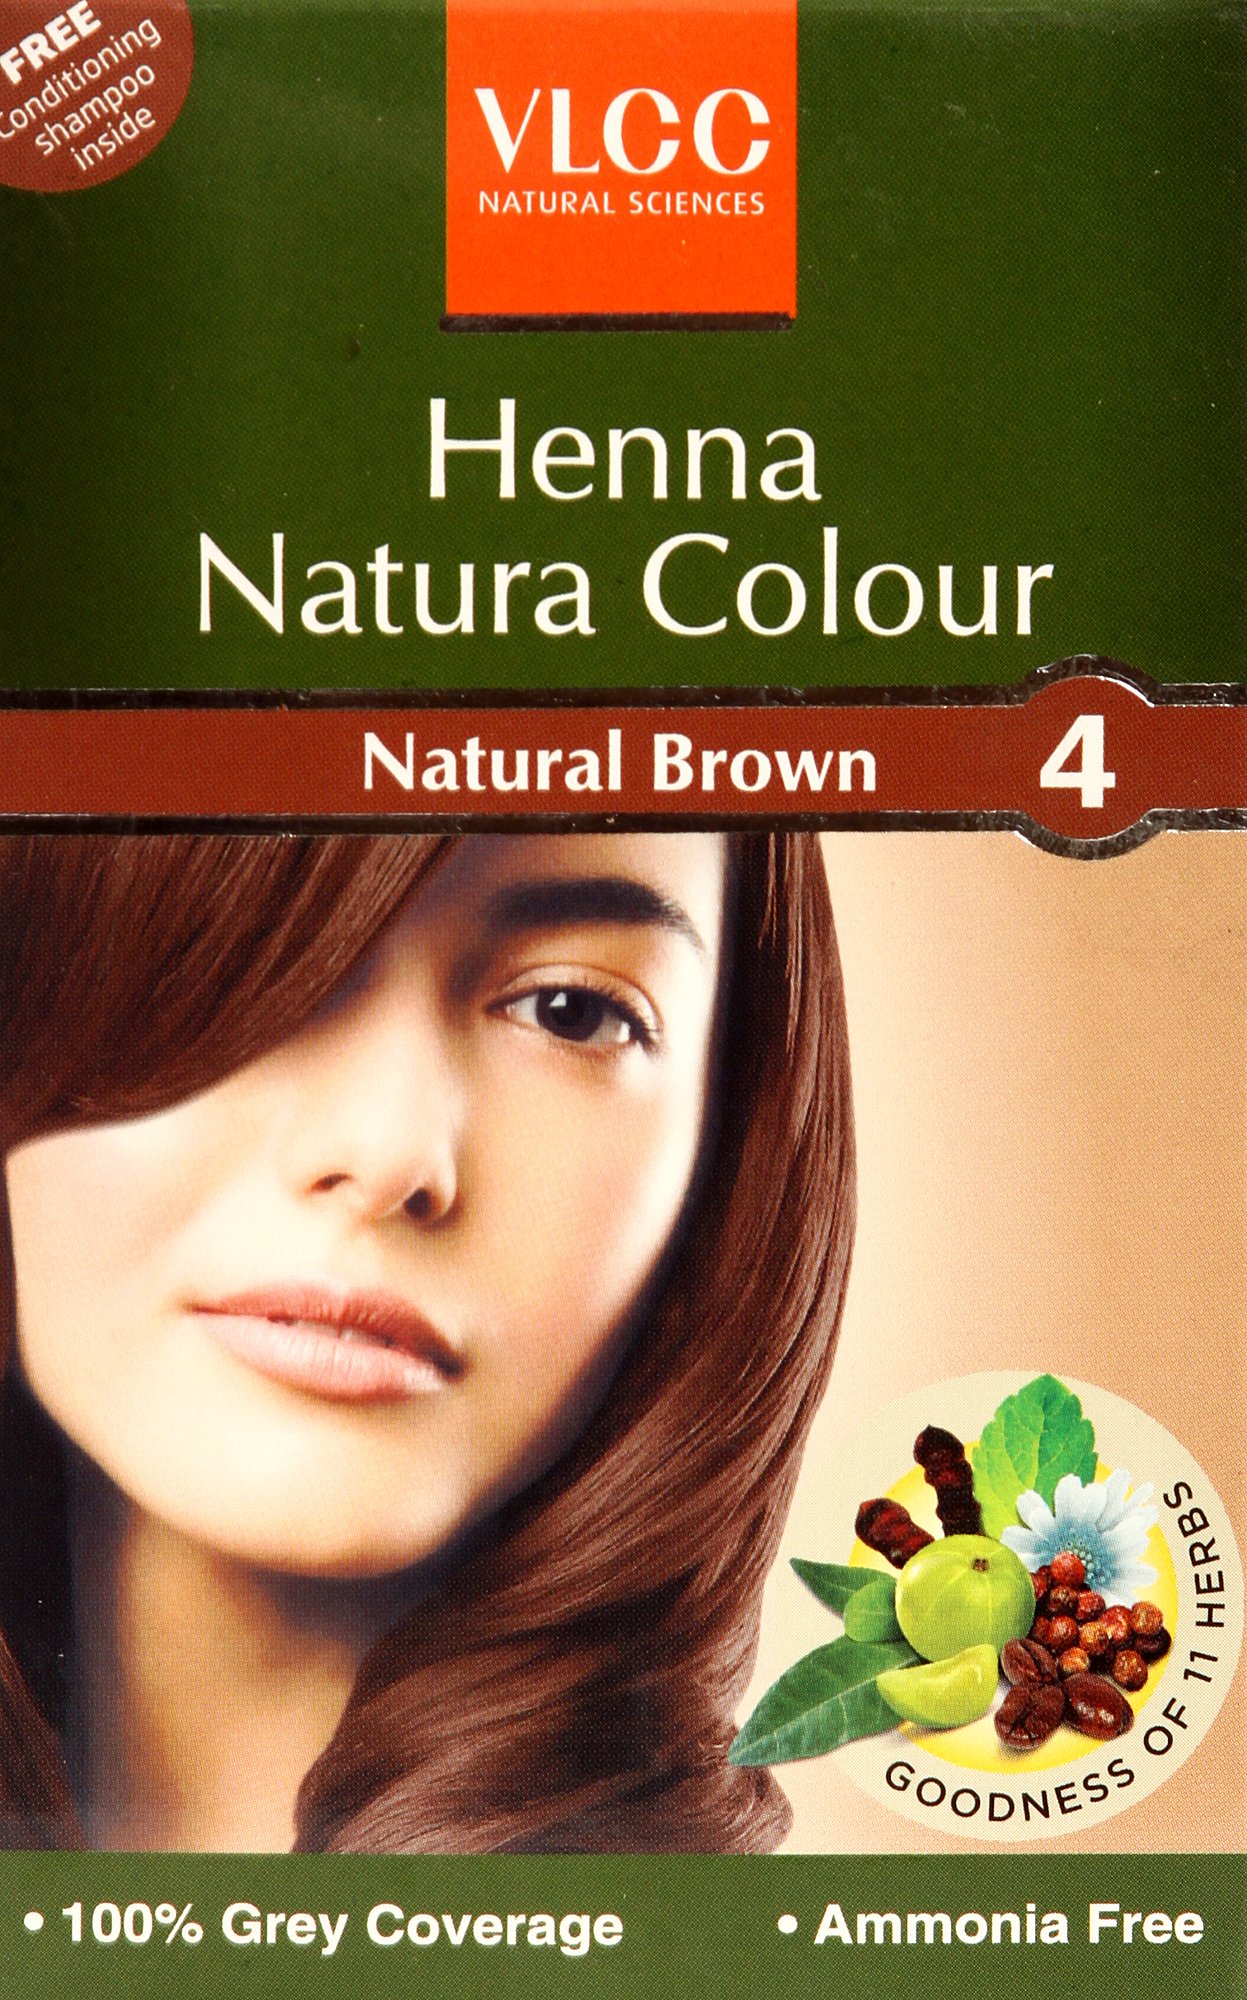 VLCC Henna Natura Colour-Natural Brown - book cover